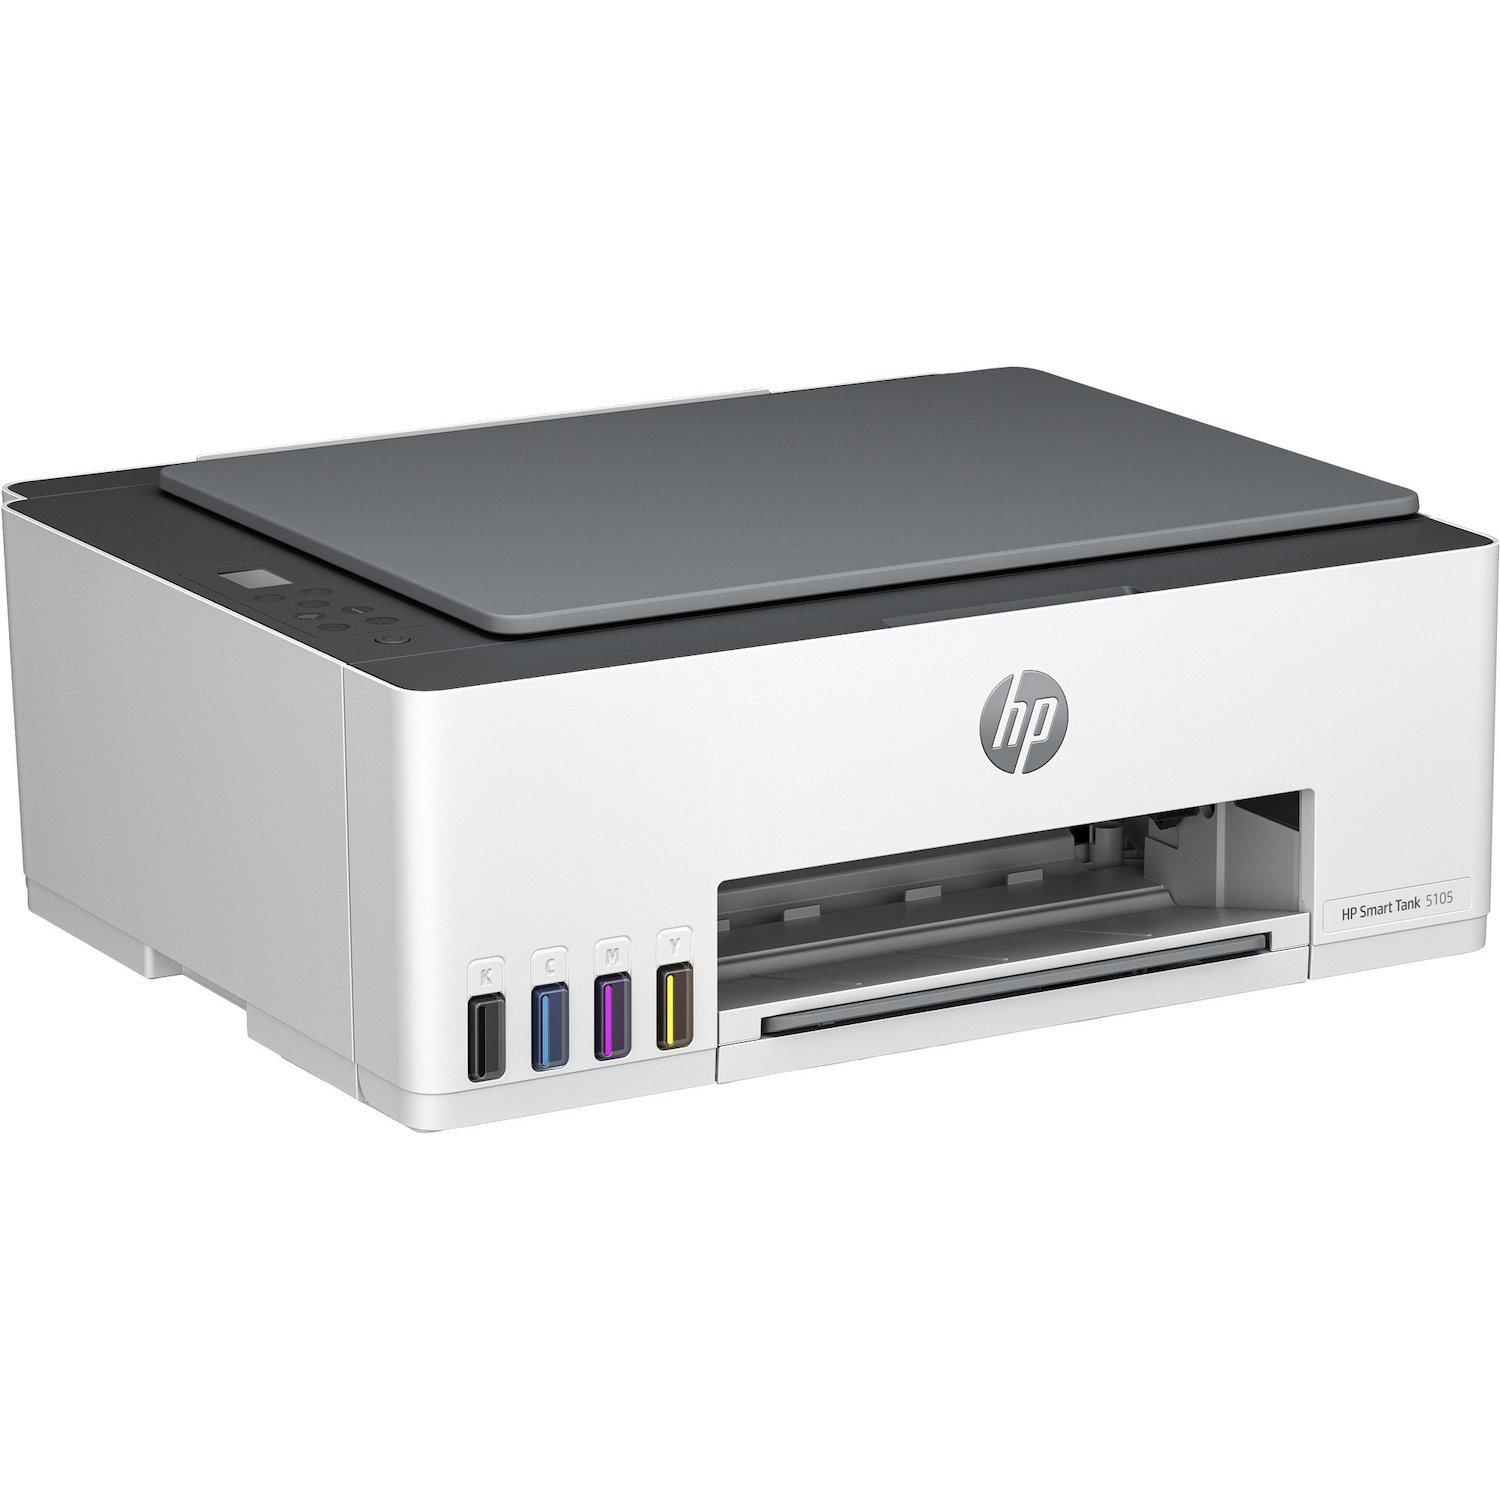 HP Smart Tank 5105 Wireless Inkjet Multifunction Printer - Colour - Light Basalt